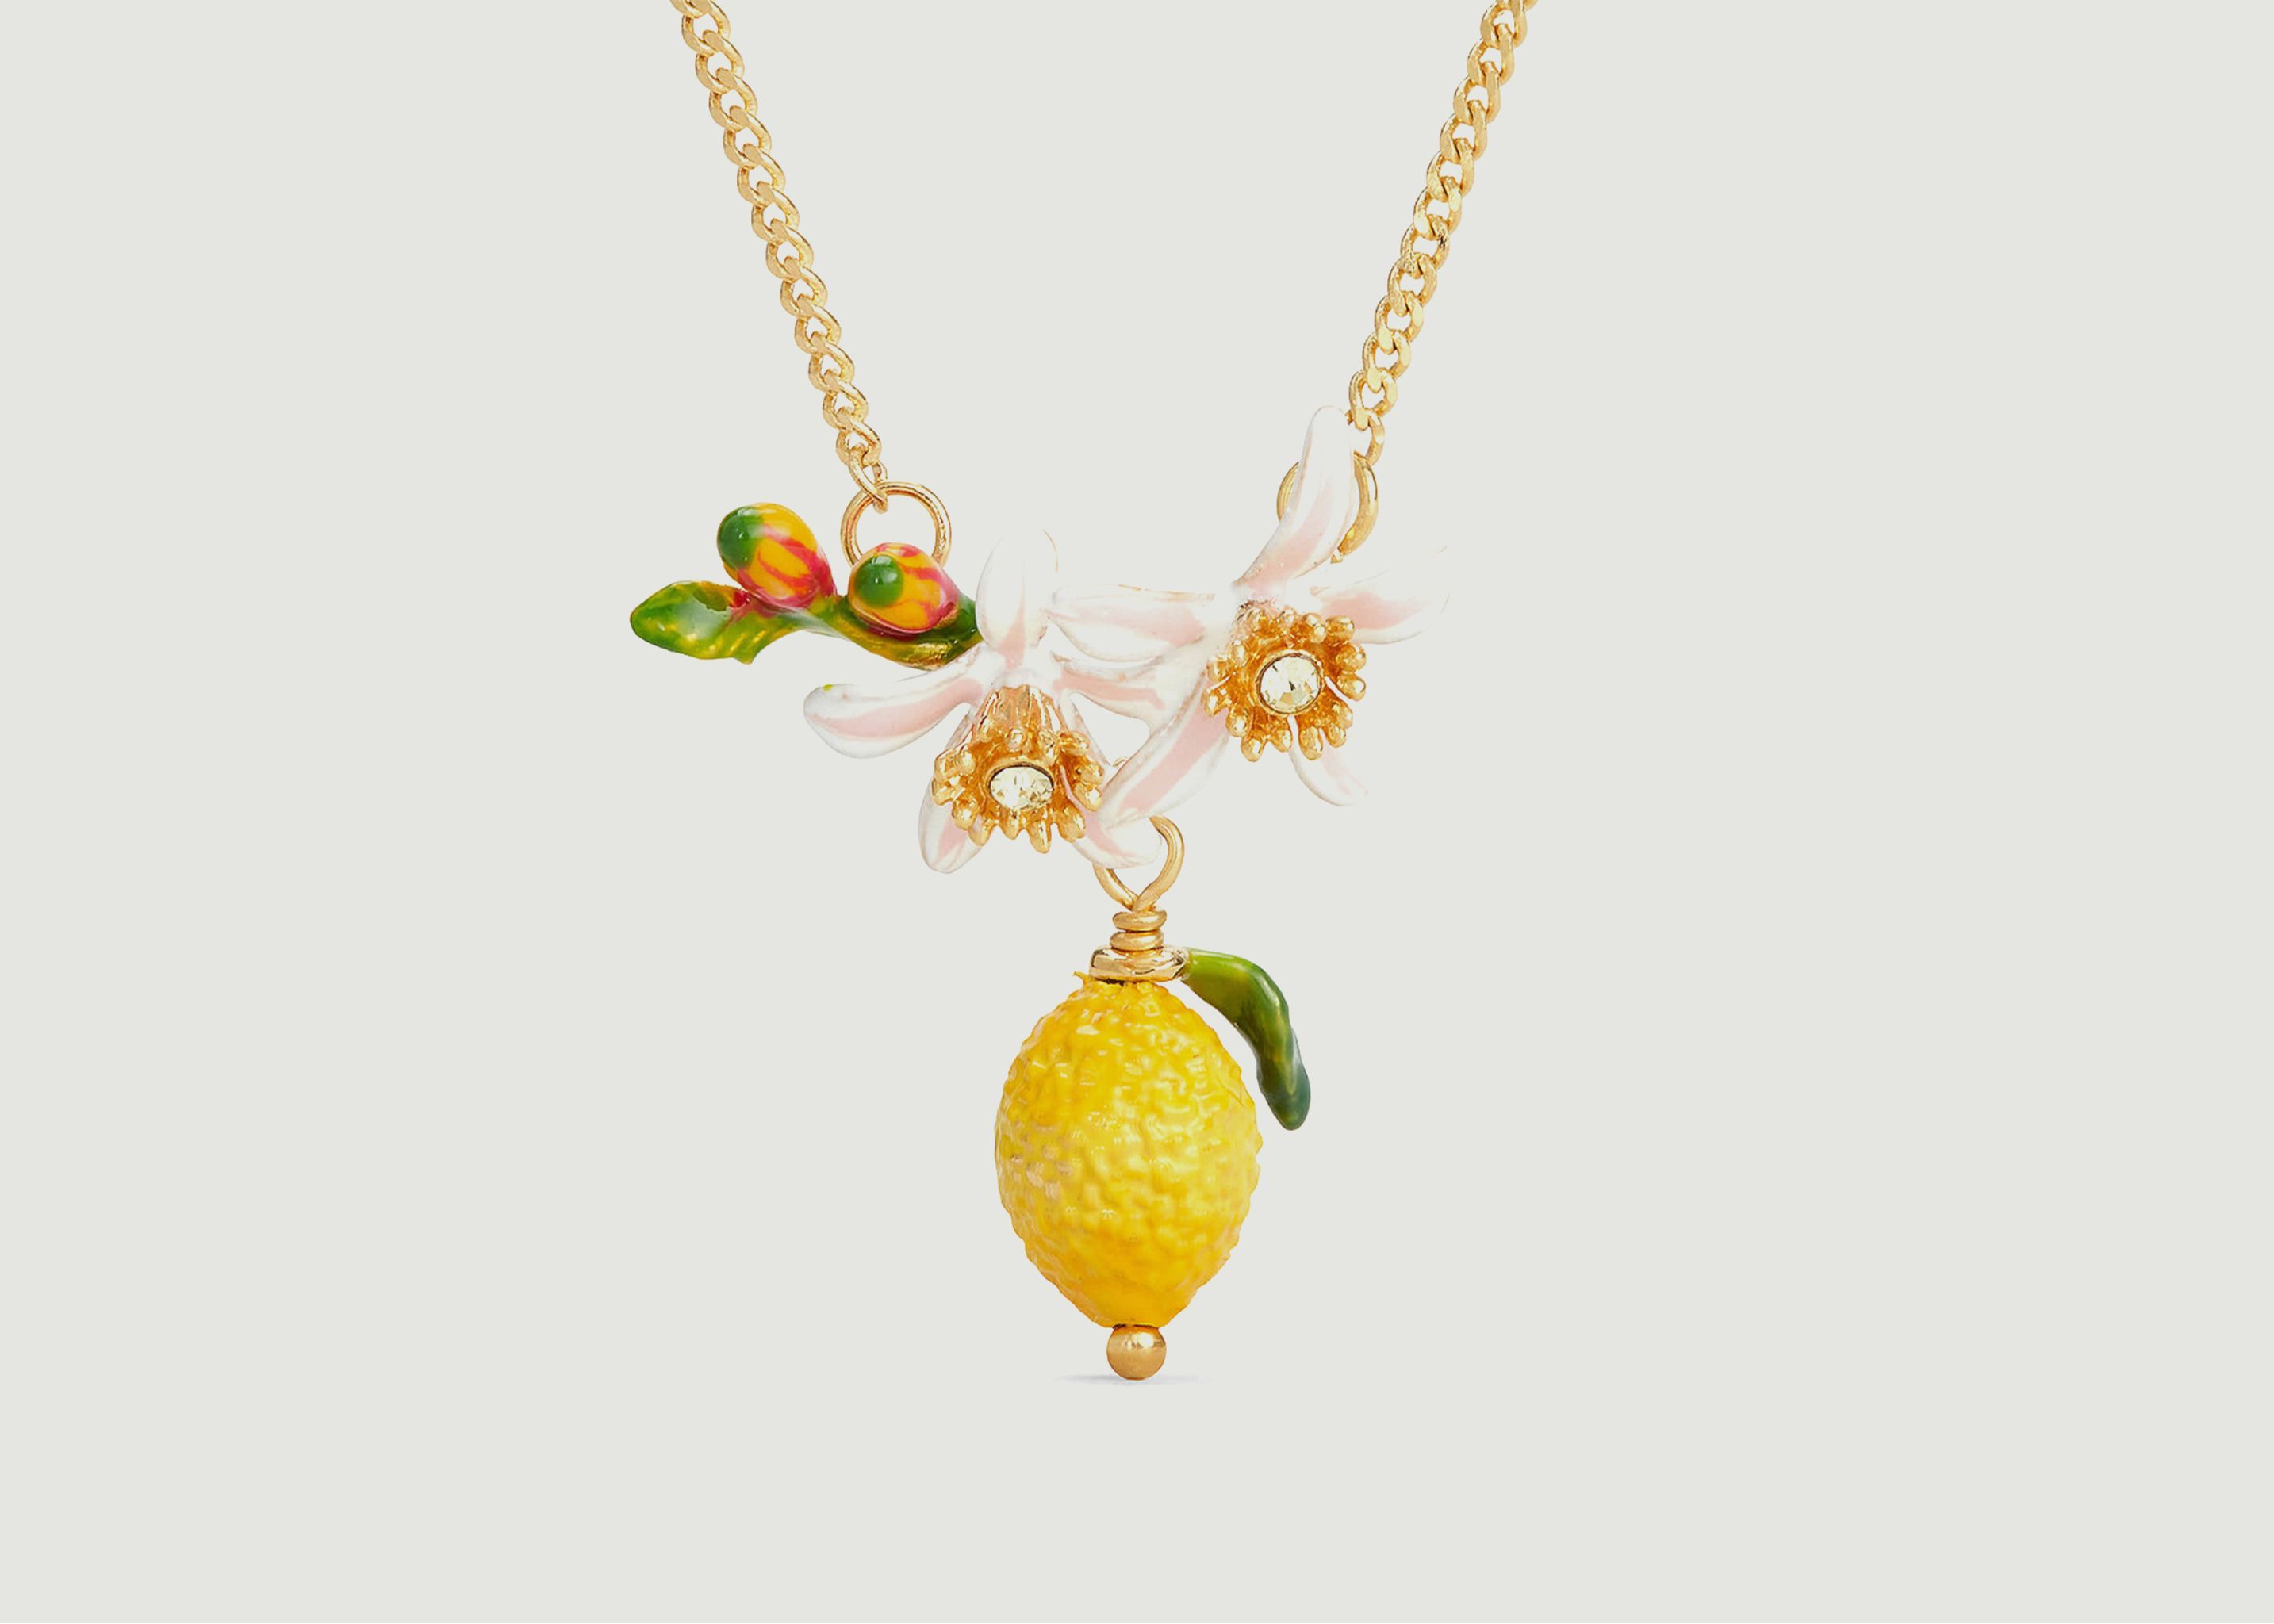 Necklace with lemon buds and flowers - Les Néréides